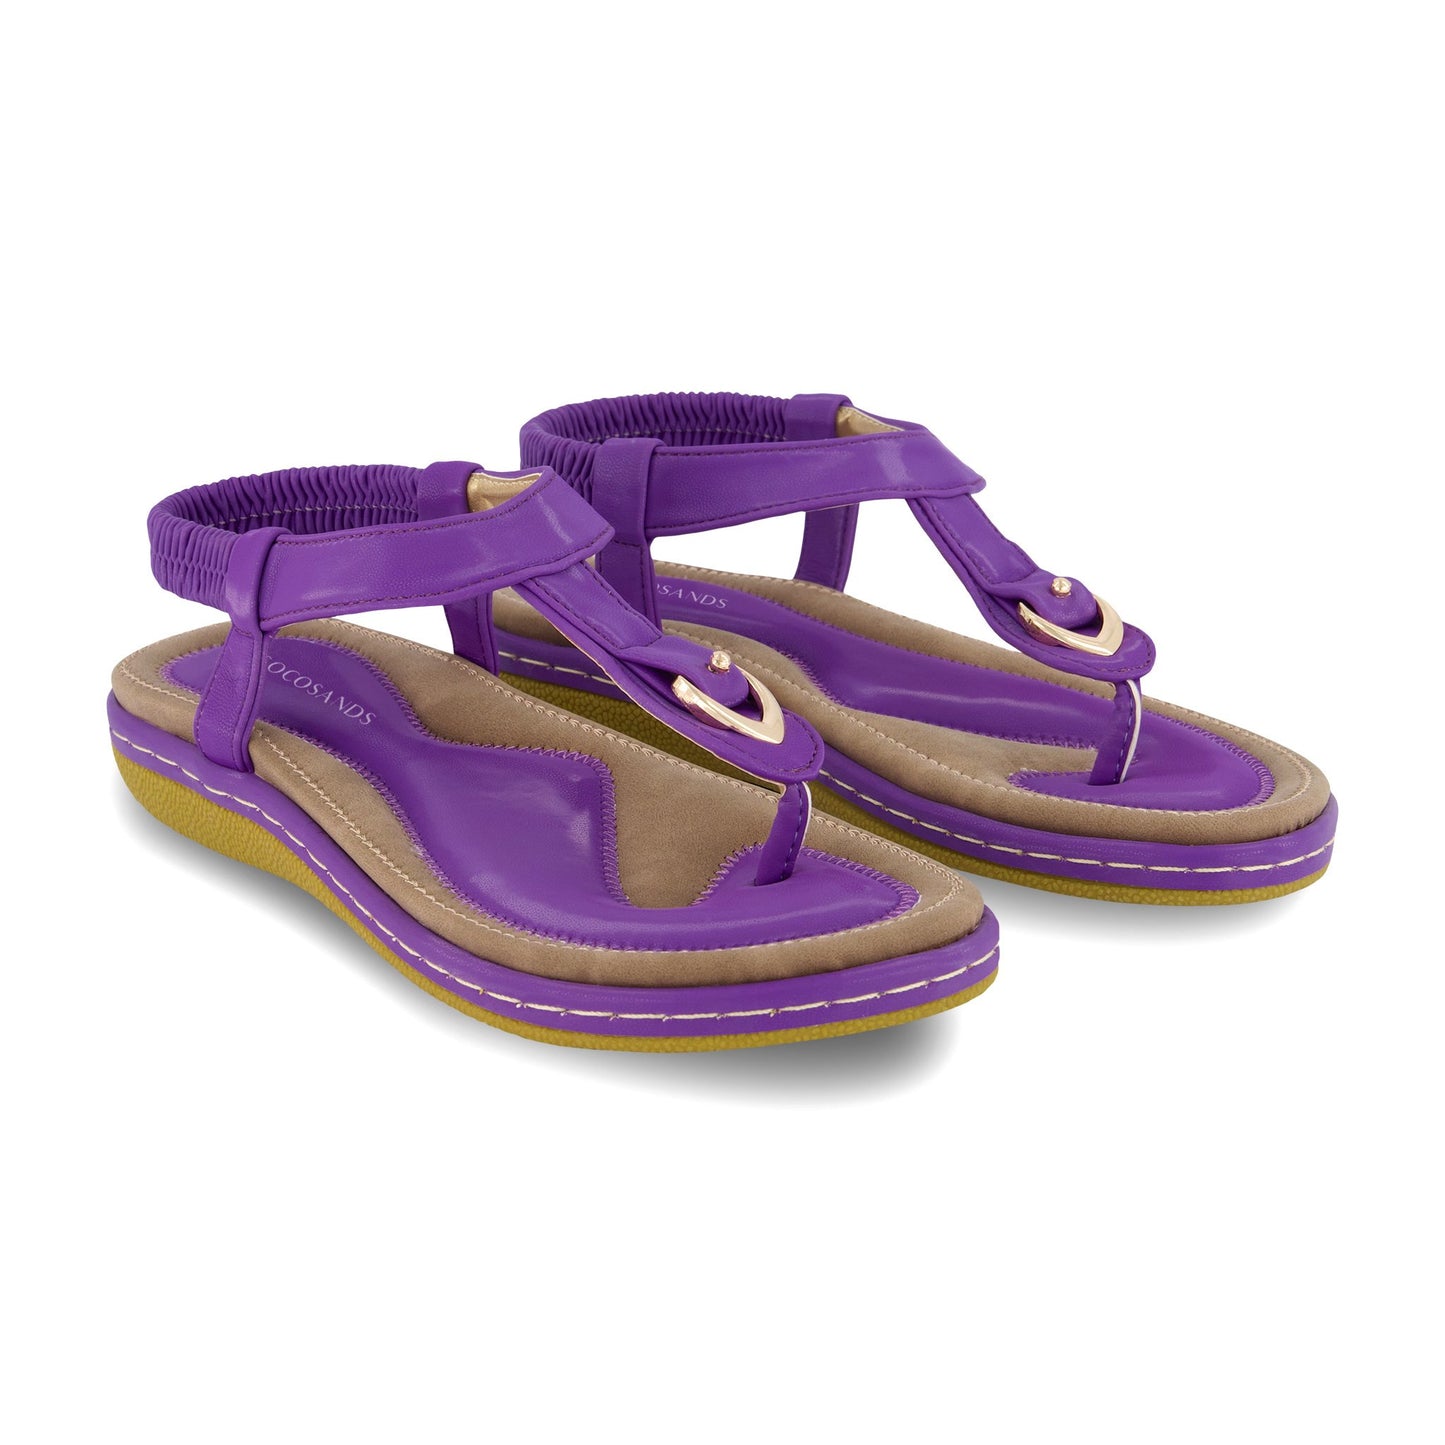 Cethrio Womens Summer Flats Sandals- Flat Beach Roman Flip Flops on  Clearance Wide Width Purple Dressy Sandals/ Slides Size 9